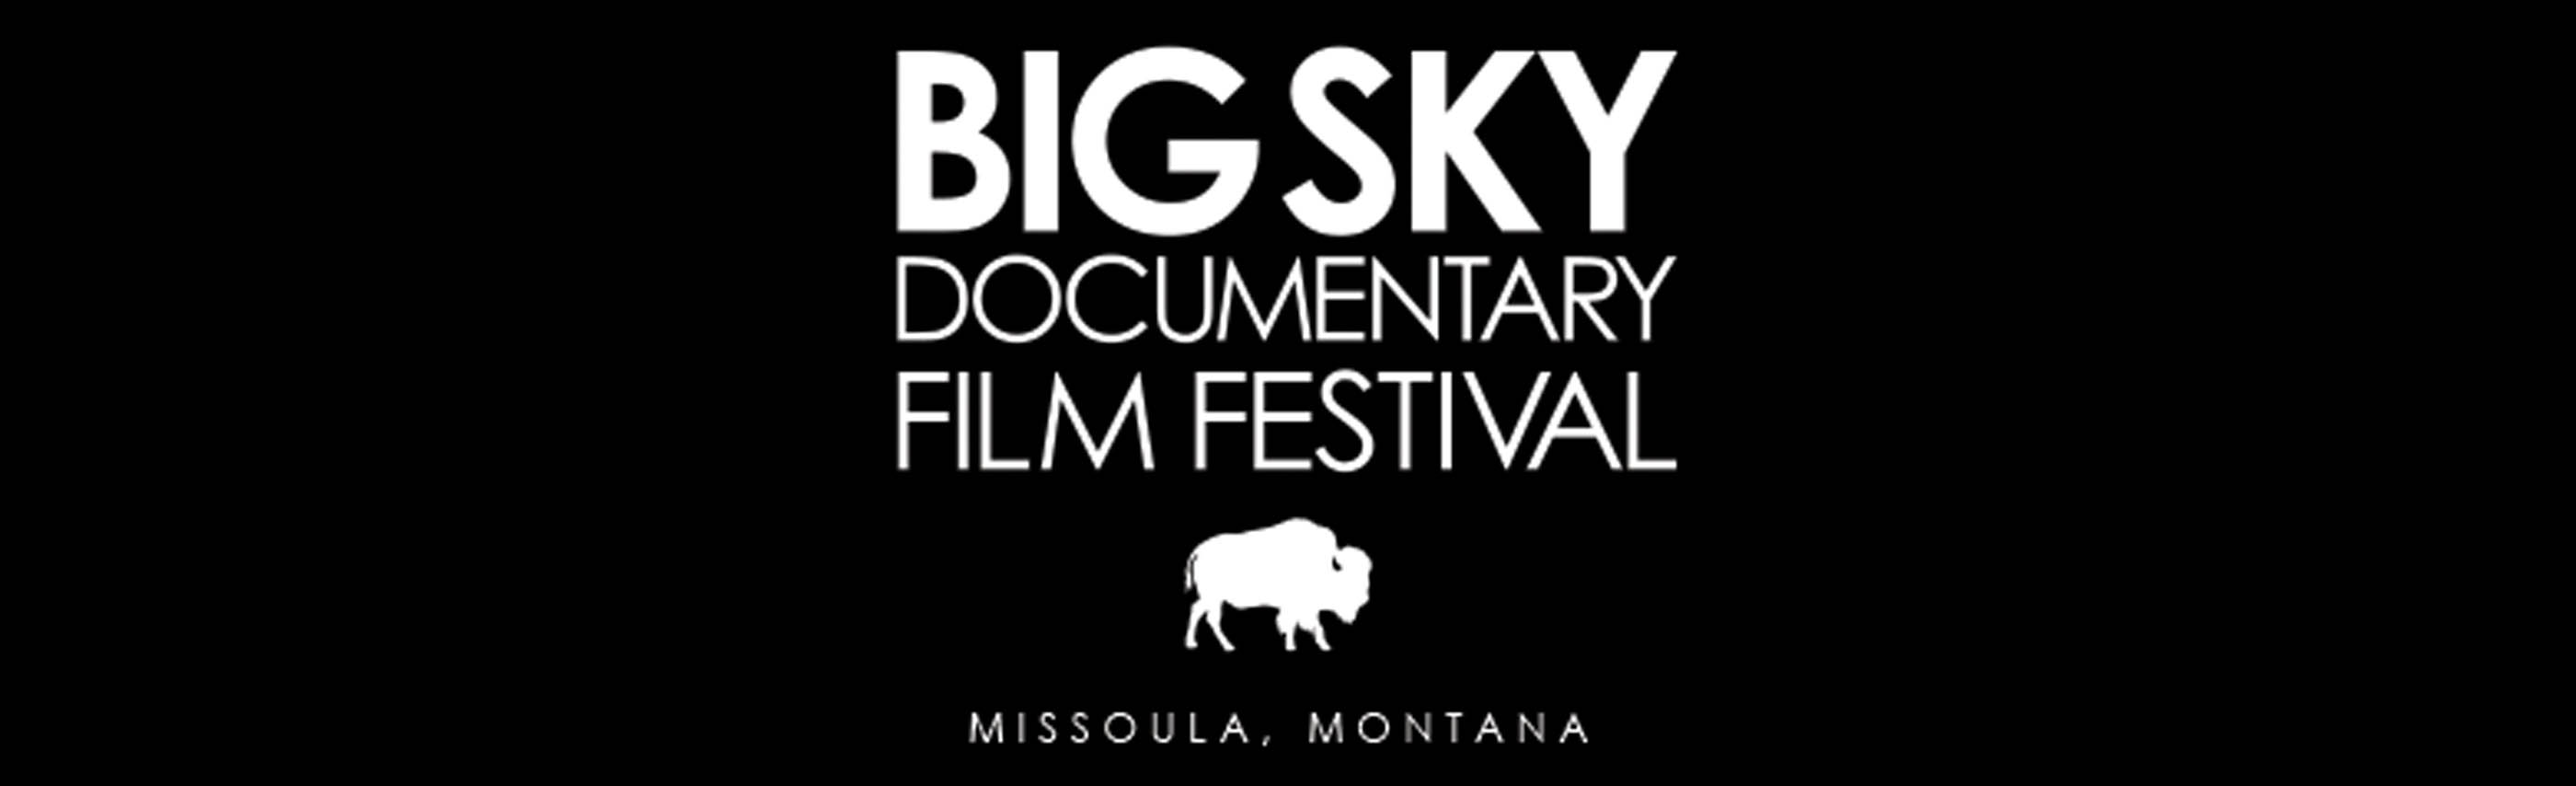 Big Sky Documentary Film Festival Logjam Presents